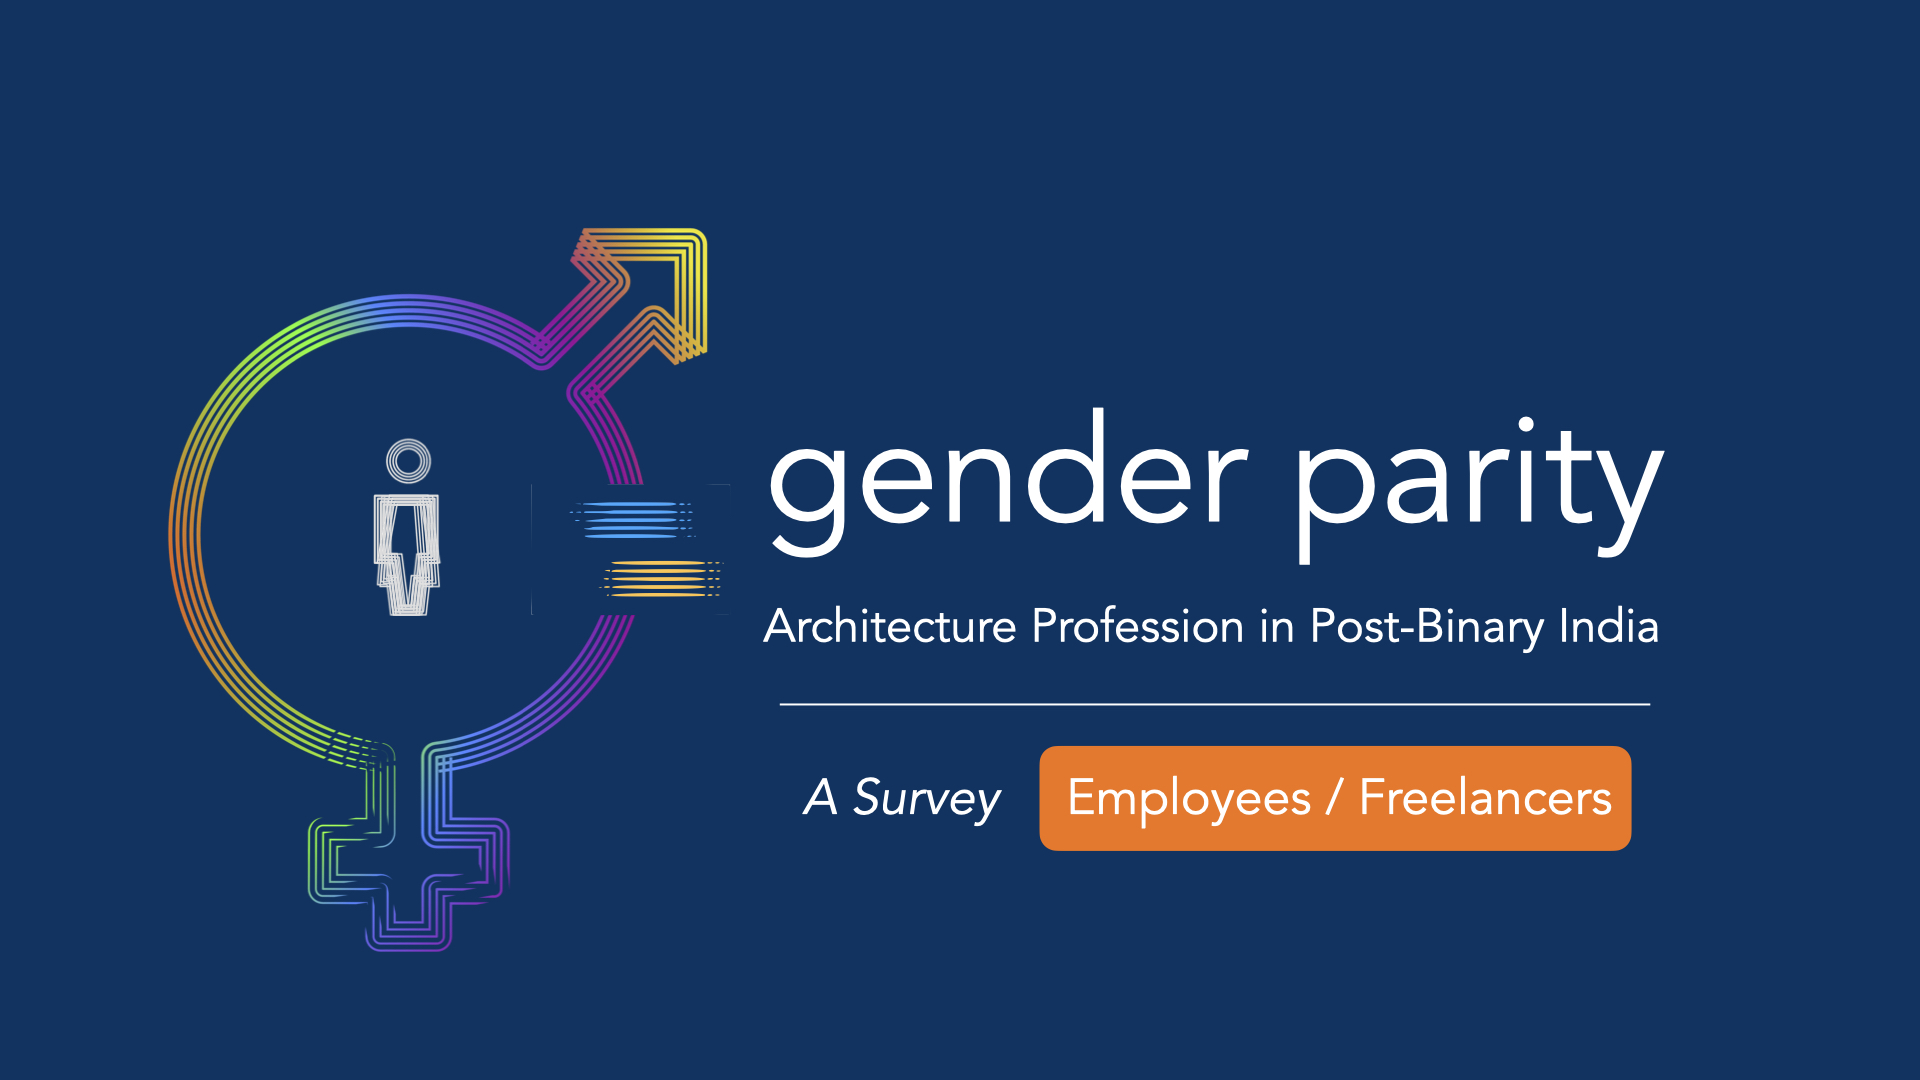 Gender Parity Survey - Employees / Freelancers